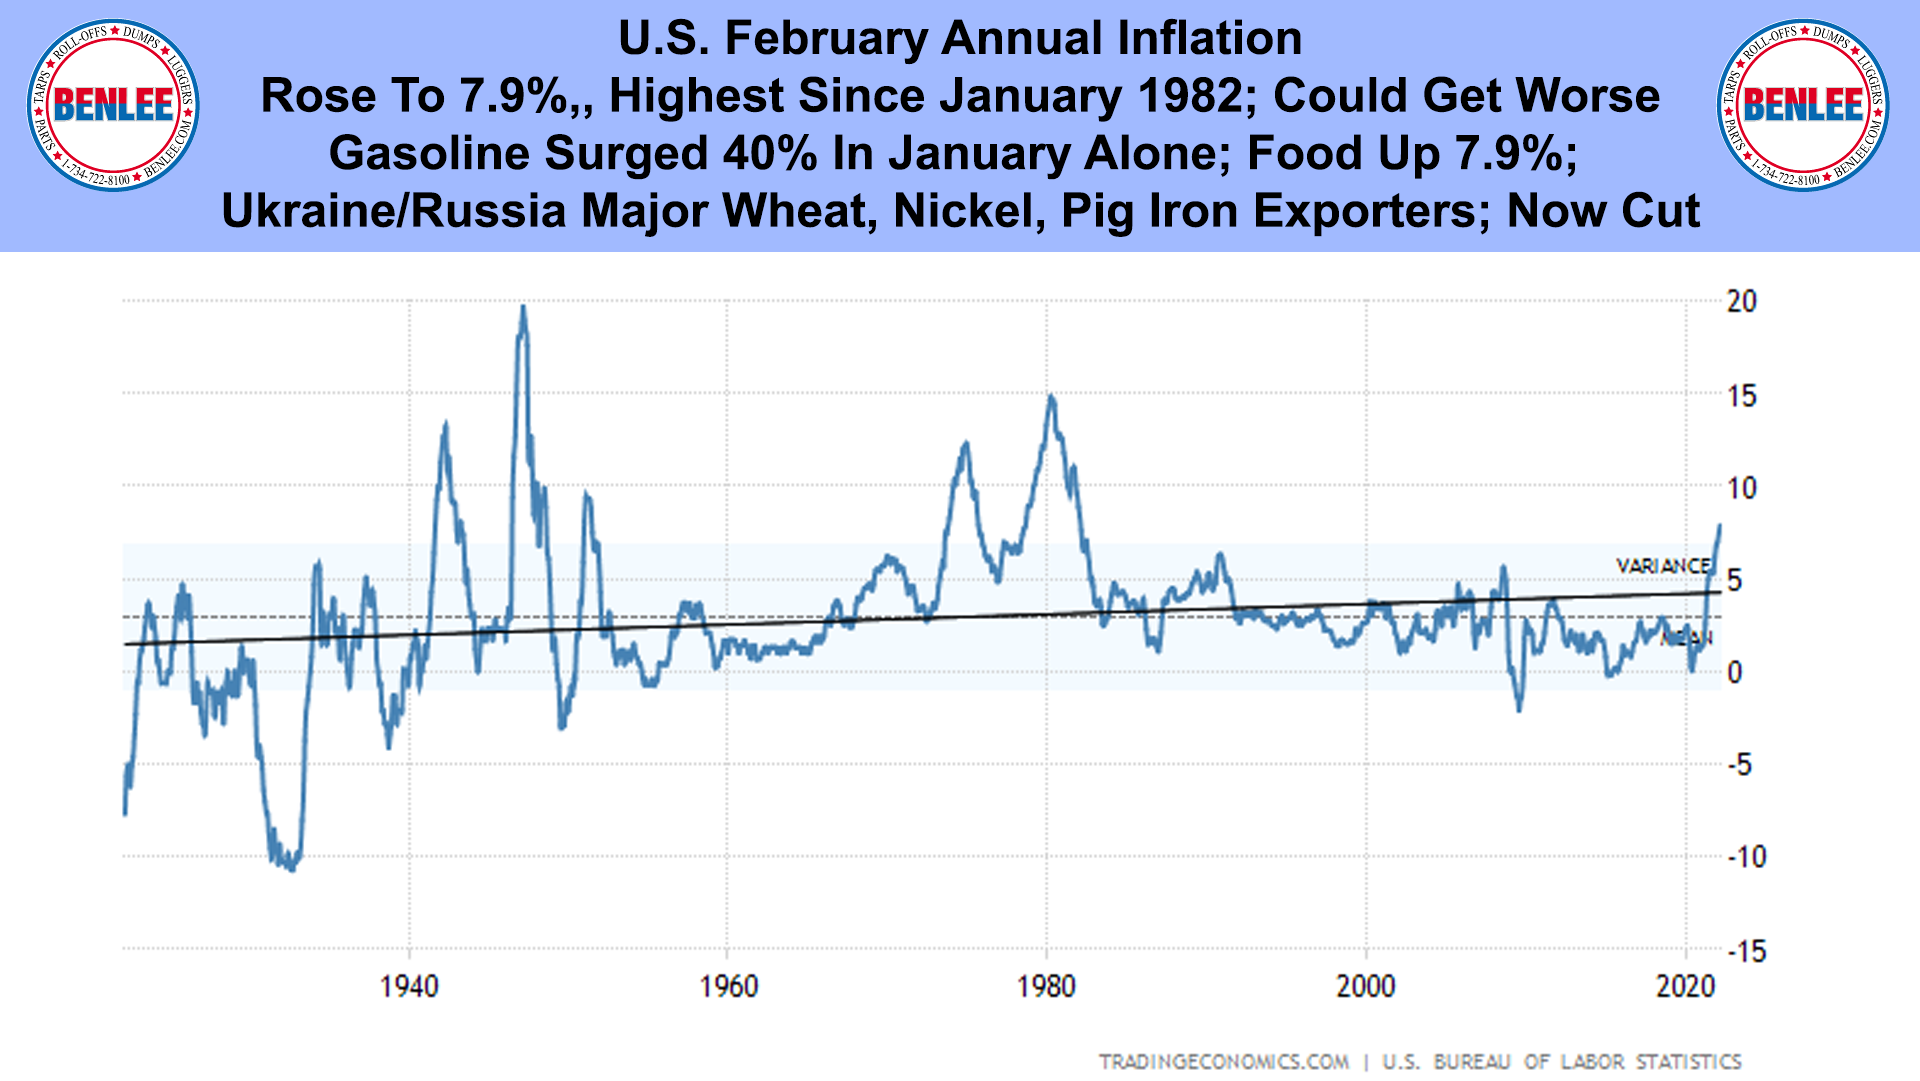 U.S. February Annual Inflation